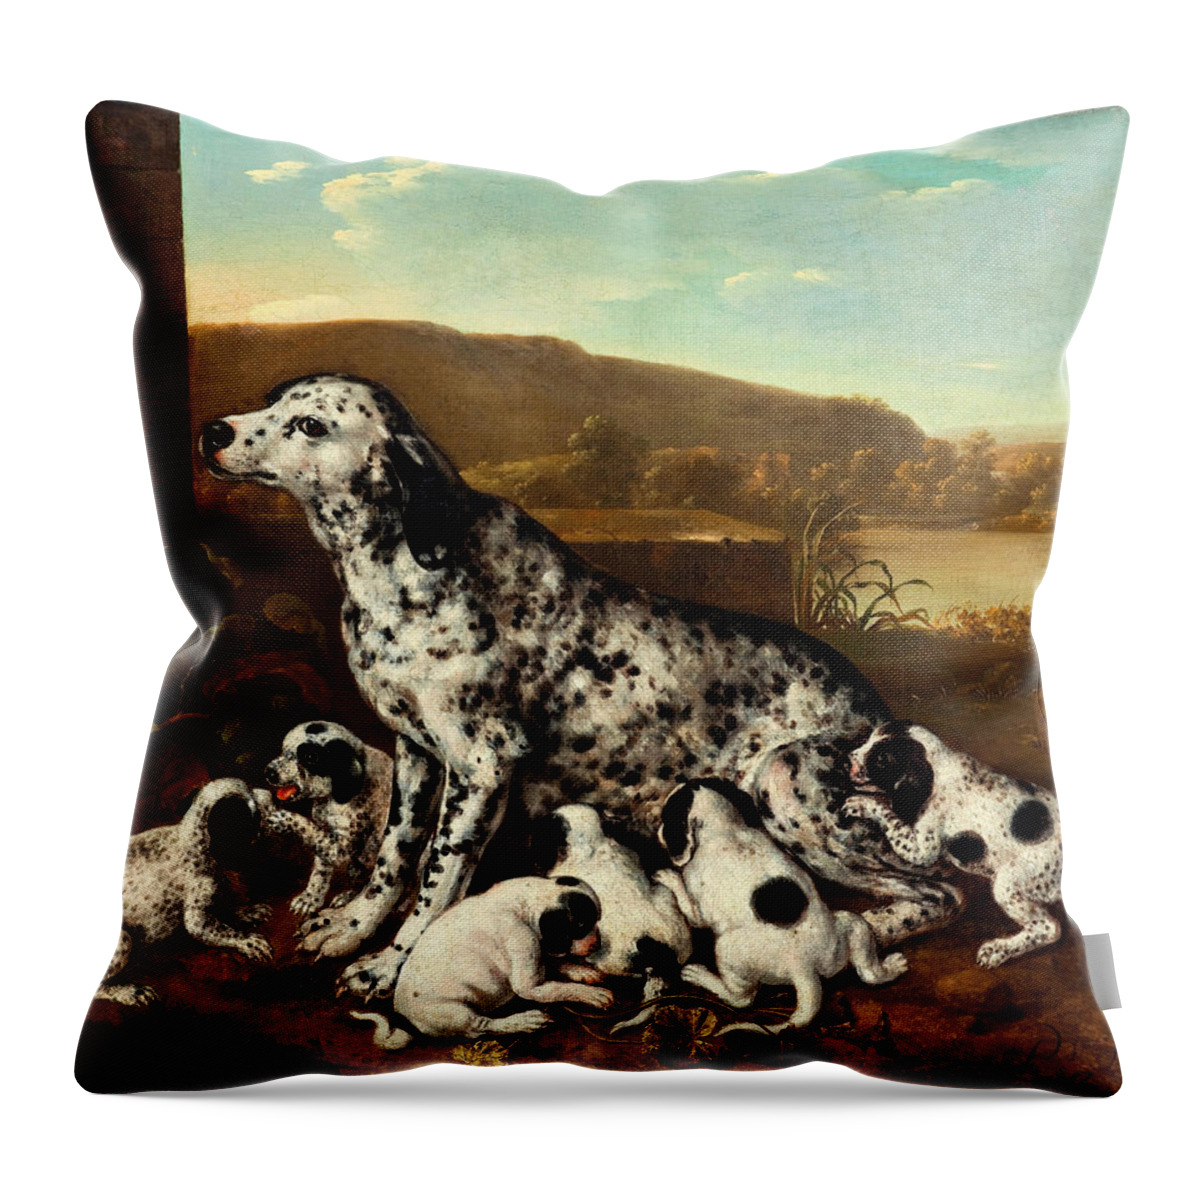 Pieter Van Der Hulst Throw Pillow featuring the painting Dalmatian dog with puppies #2 by Pieter van der Hulst